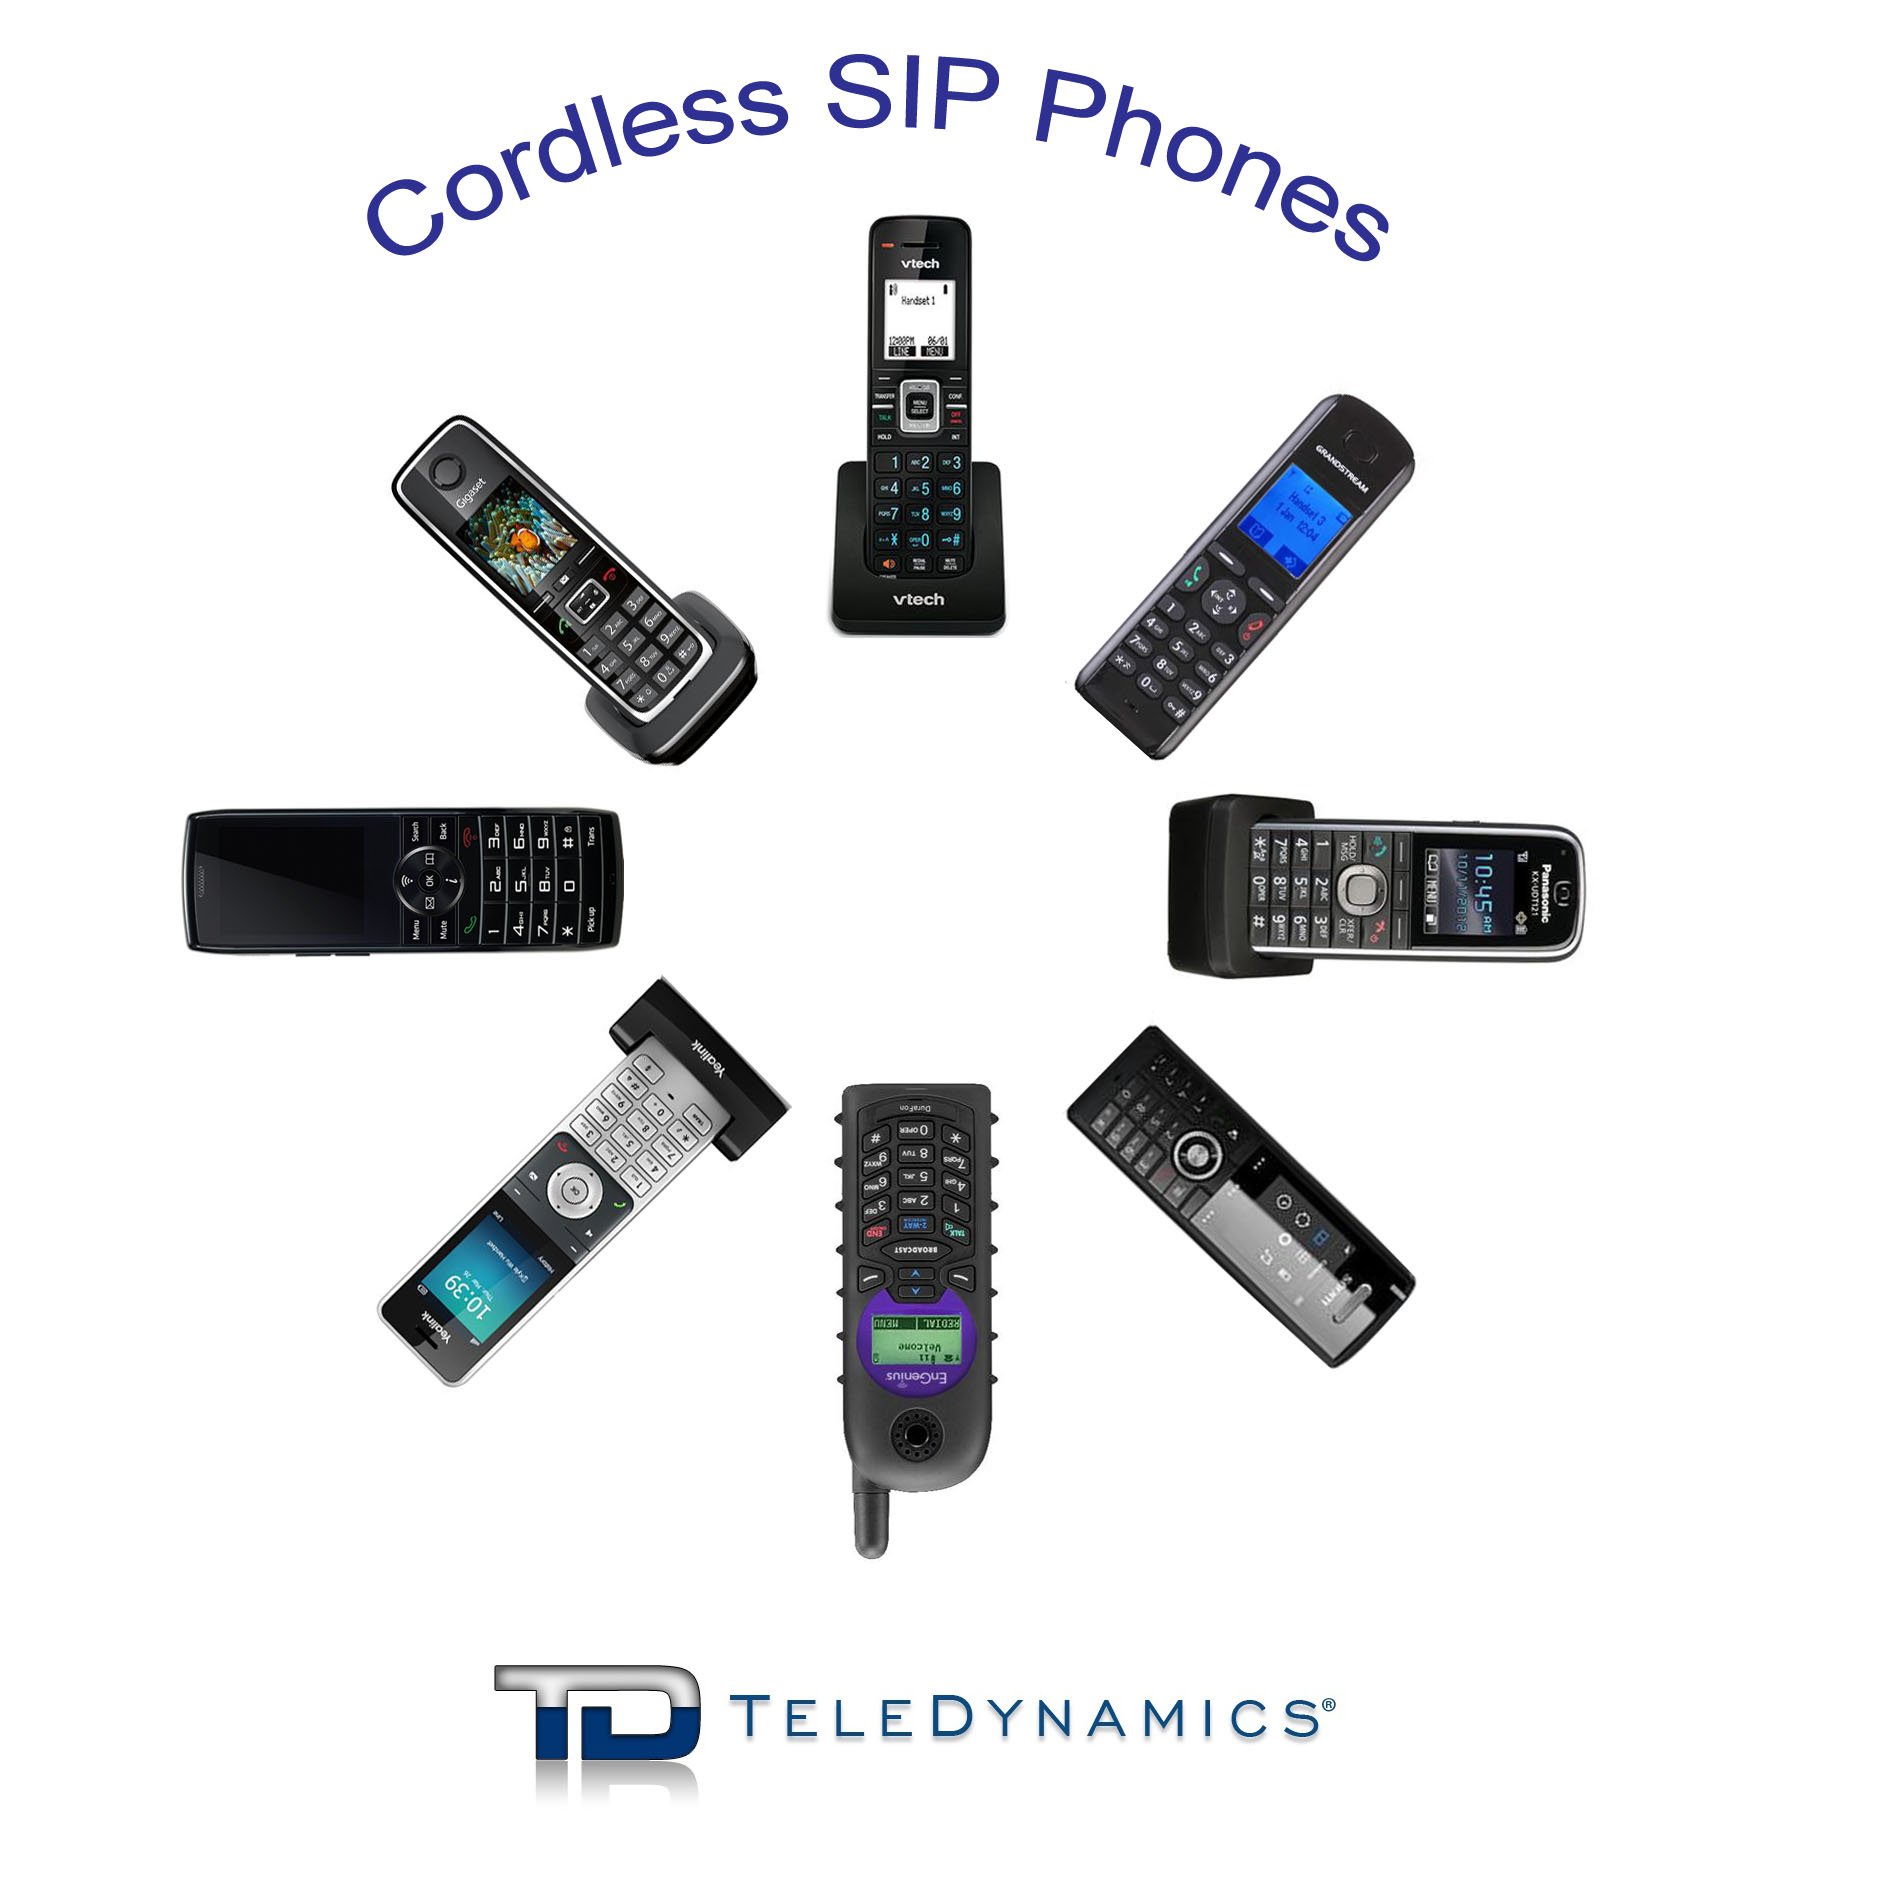 DECT Phones - Sangoma Technologies